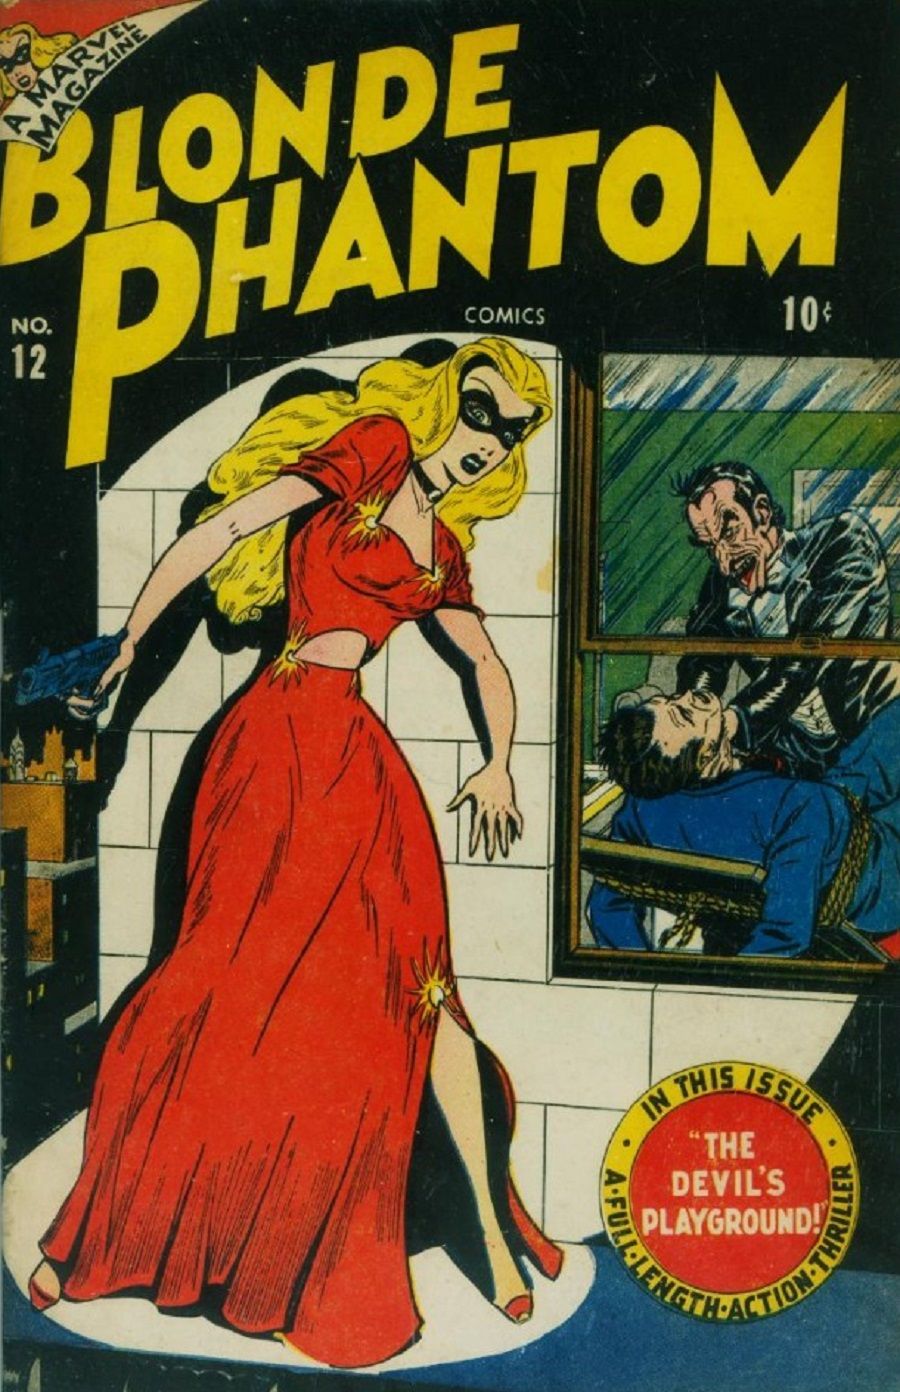 The Blonde Phantom's comic book